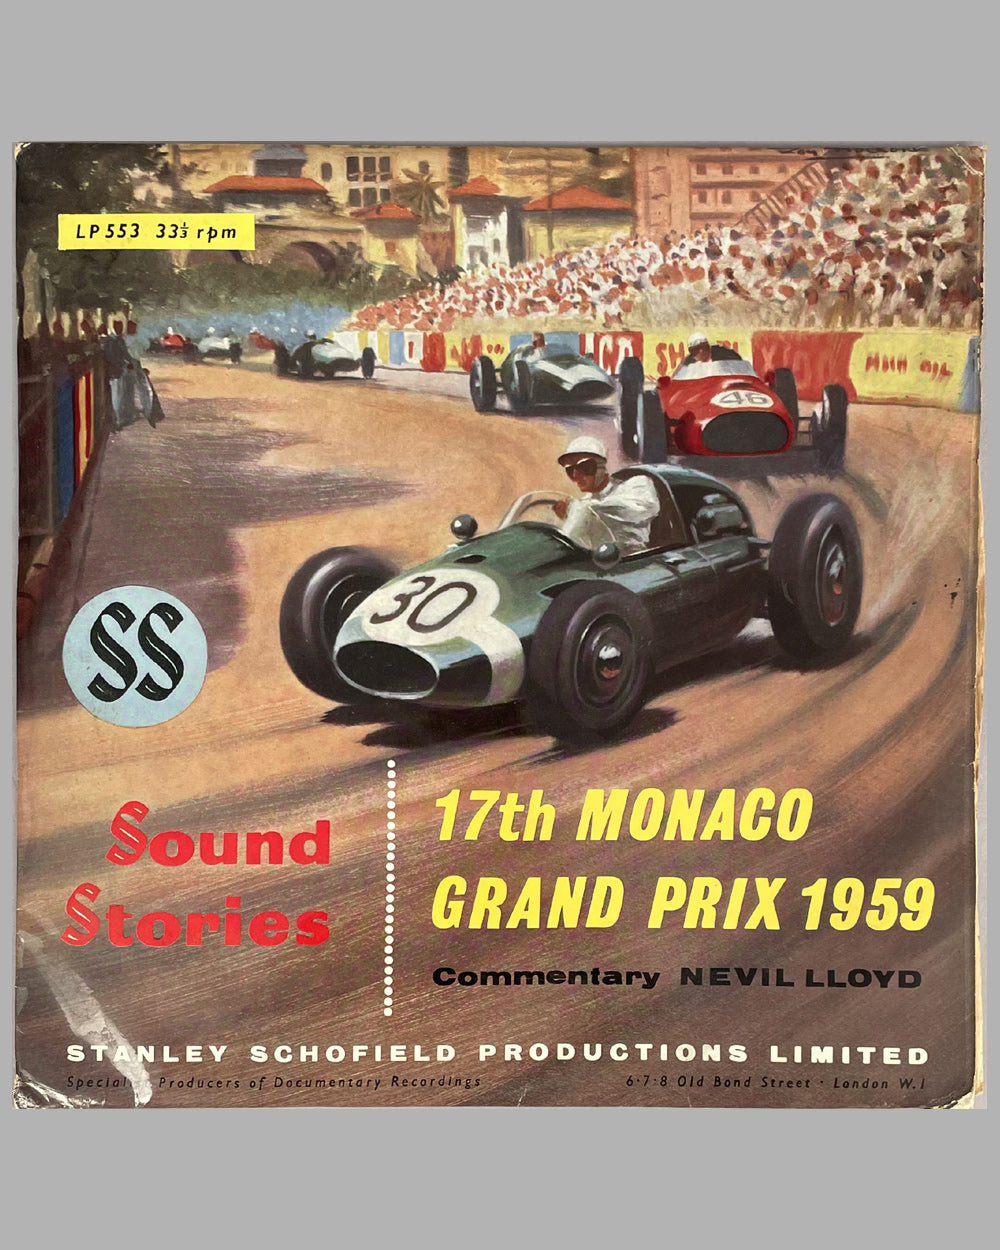 17th Monaco Grand Prix sound stories album phonograph record